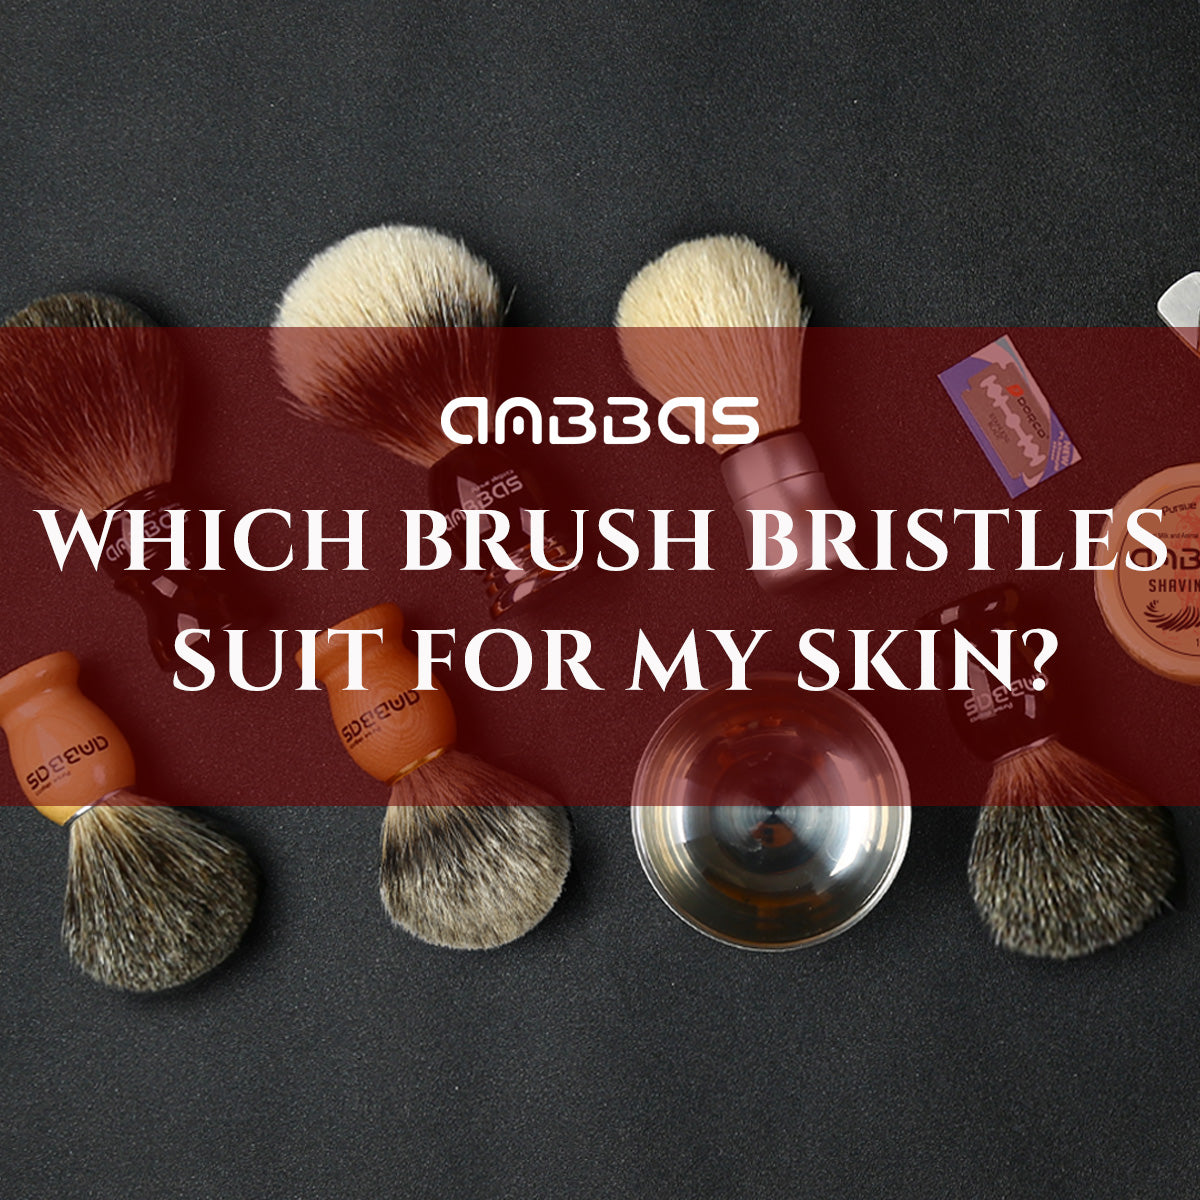 How to distinguish  multiple levels of shaving brush hair?